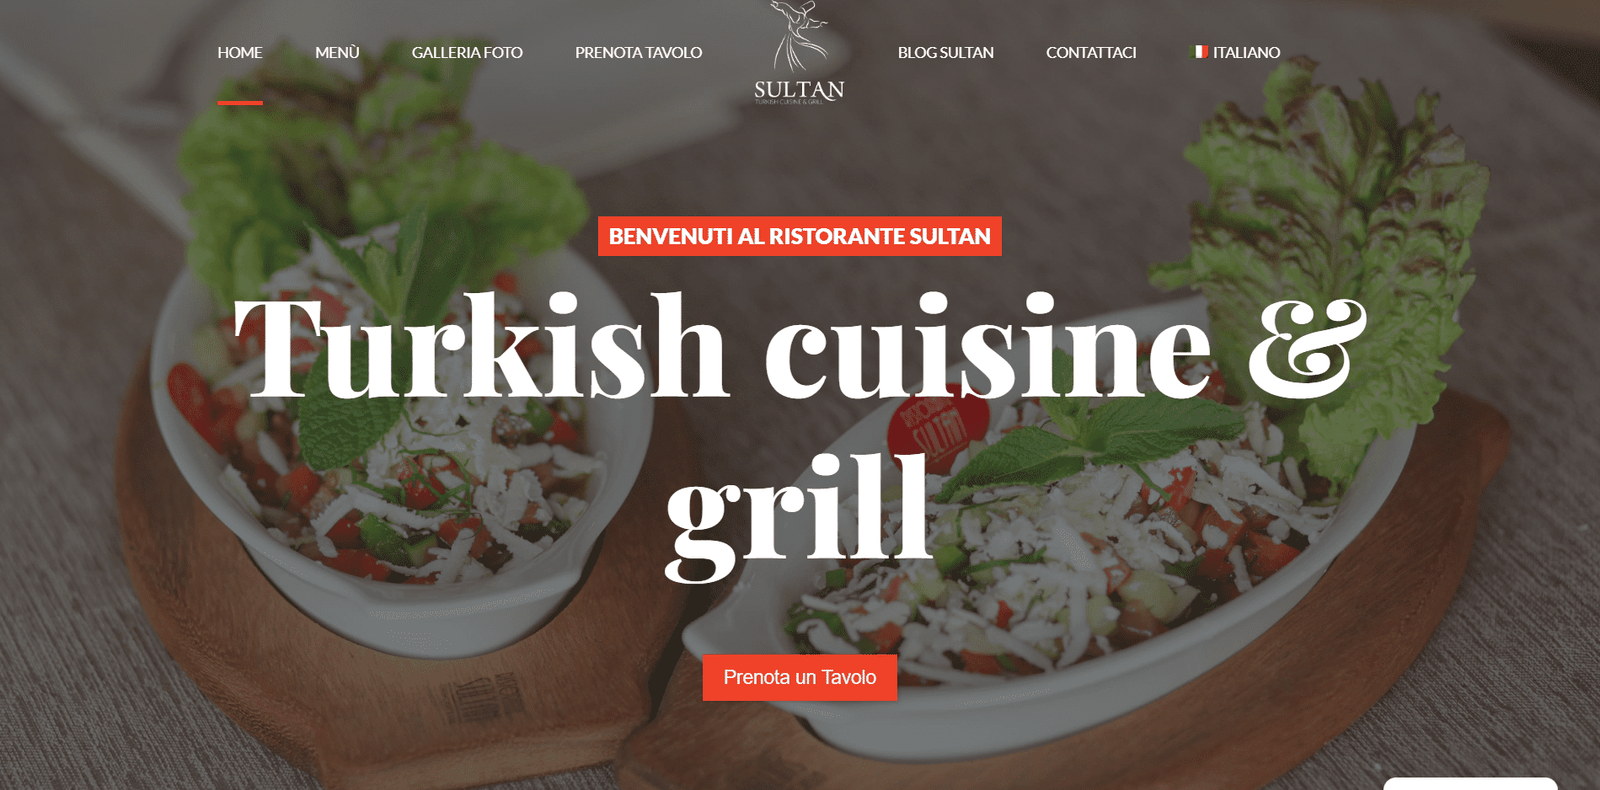 RISTORANTE SULTAN - Turkish cuisine seo